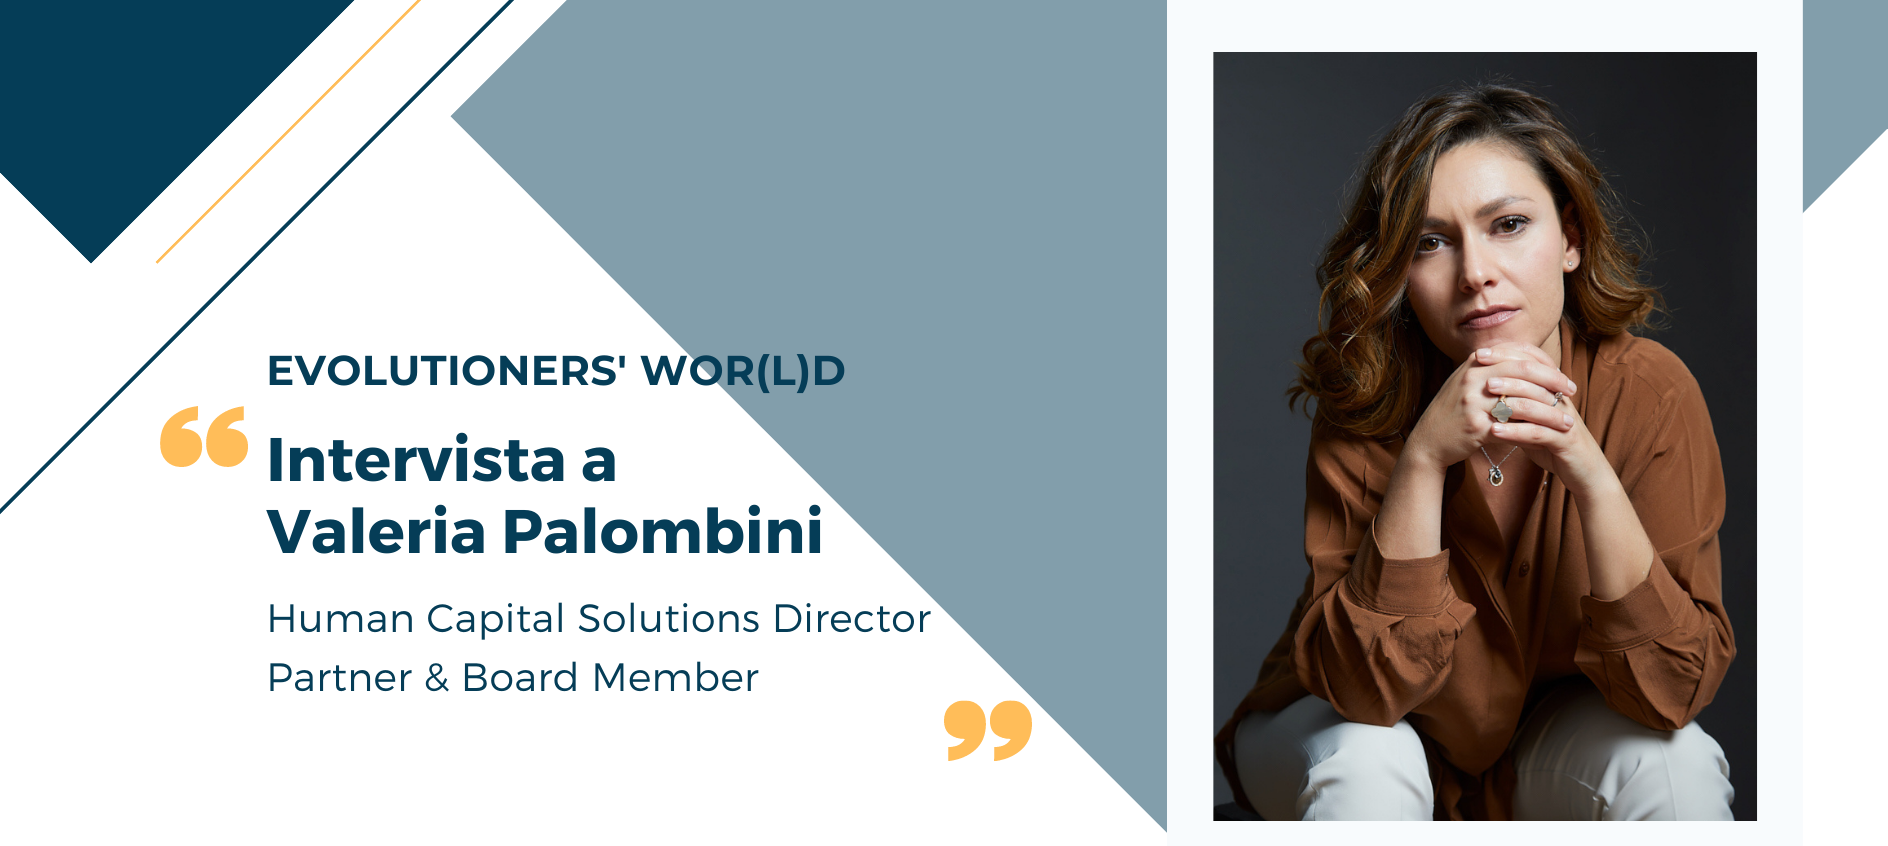 Evolutioners' world Valeria Palombini Human Capital Solutions Director